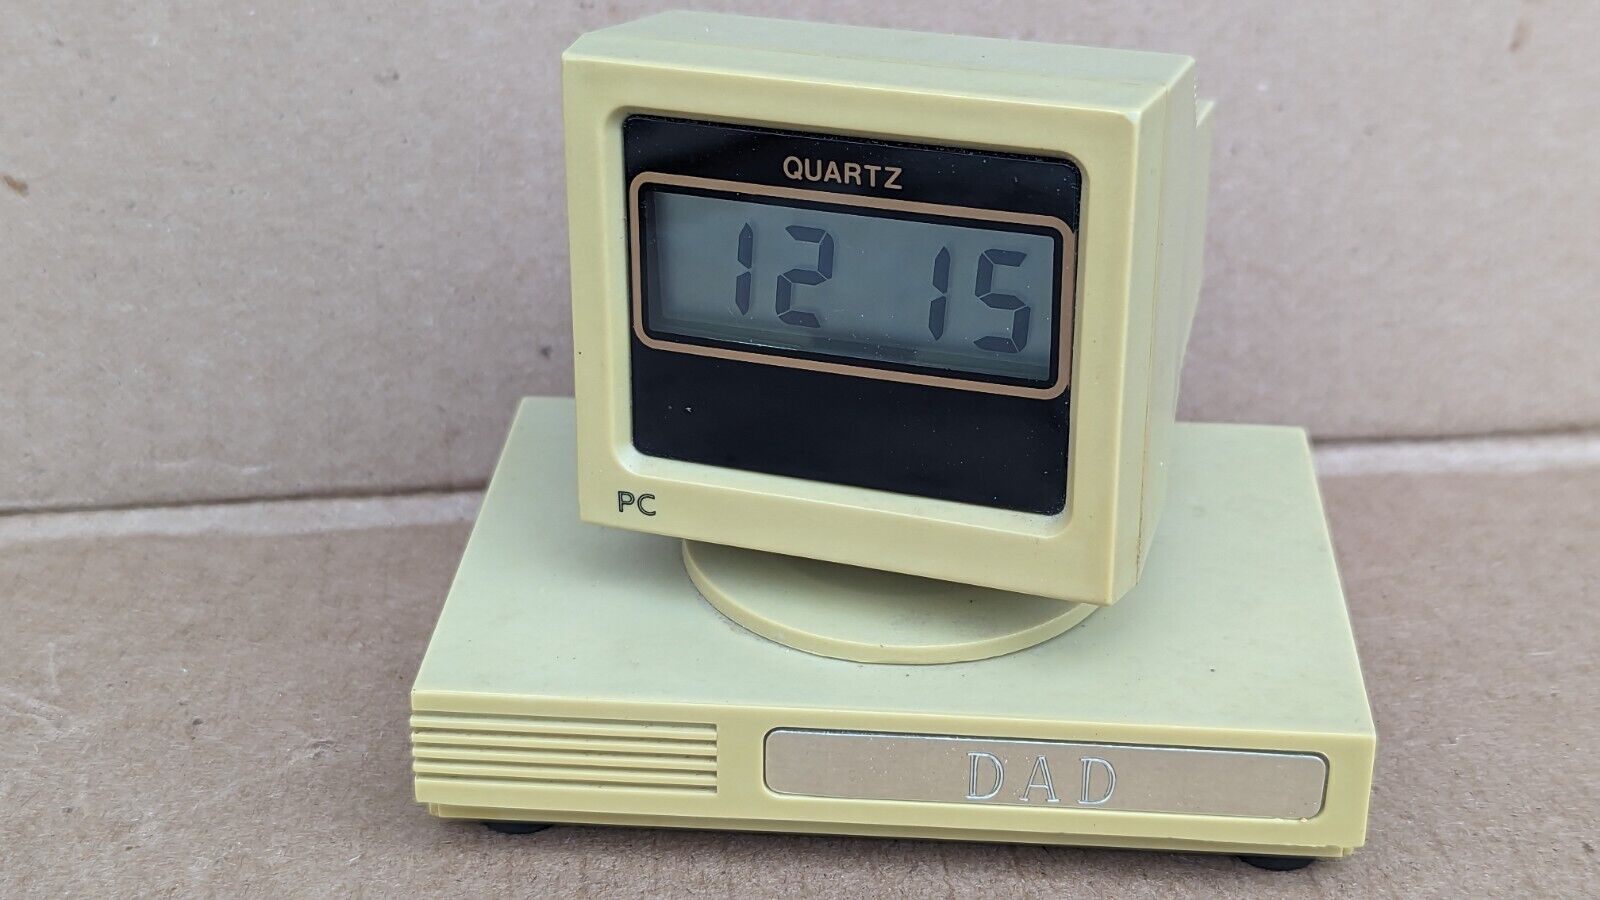 PC Computer Shape Dad Digital Display and Date Desk Clock Quartz Vintage